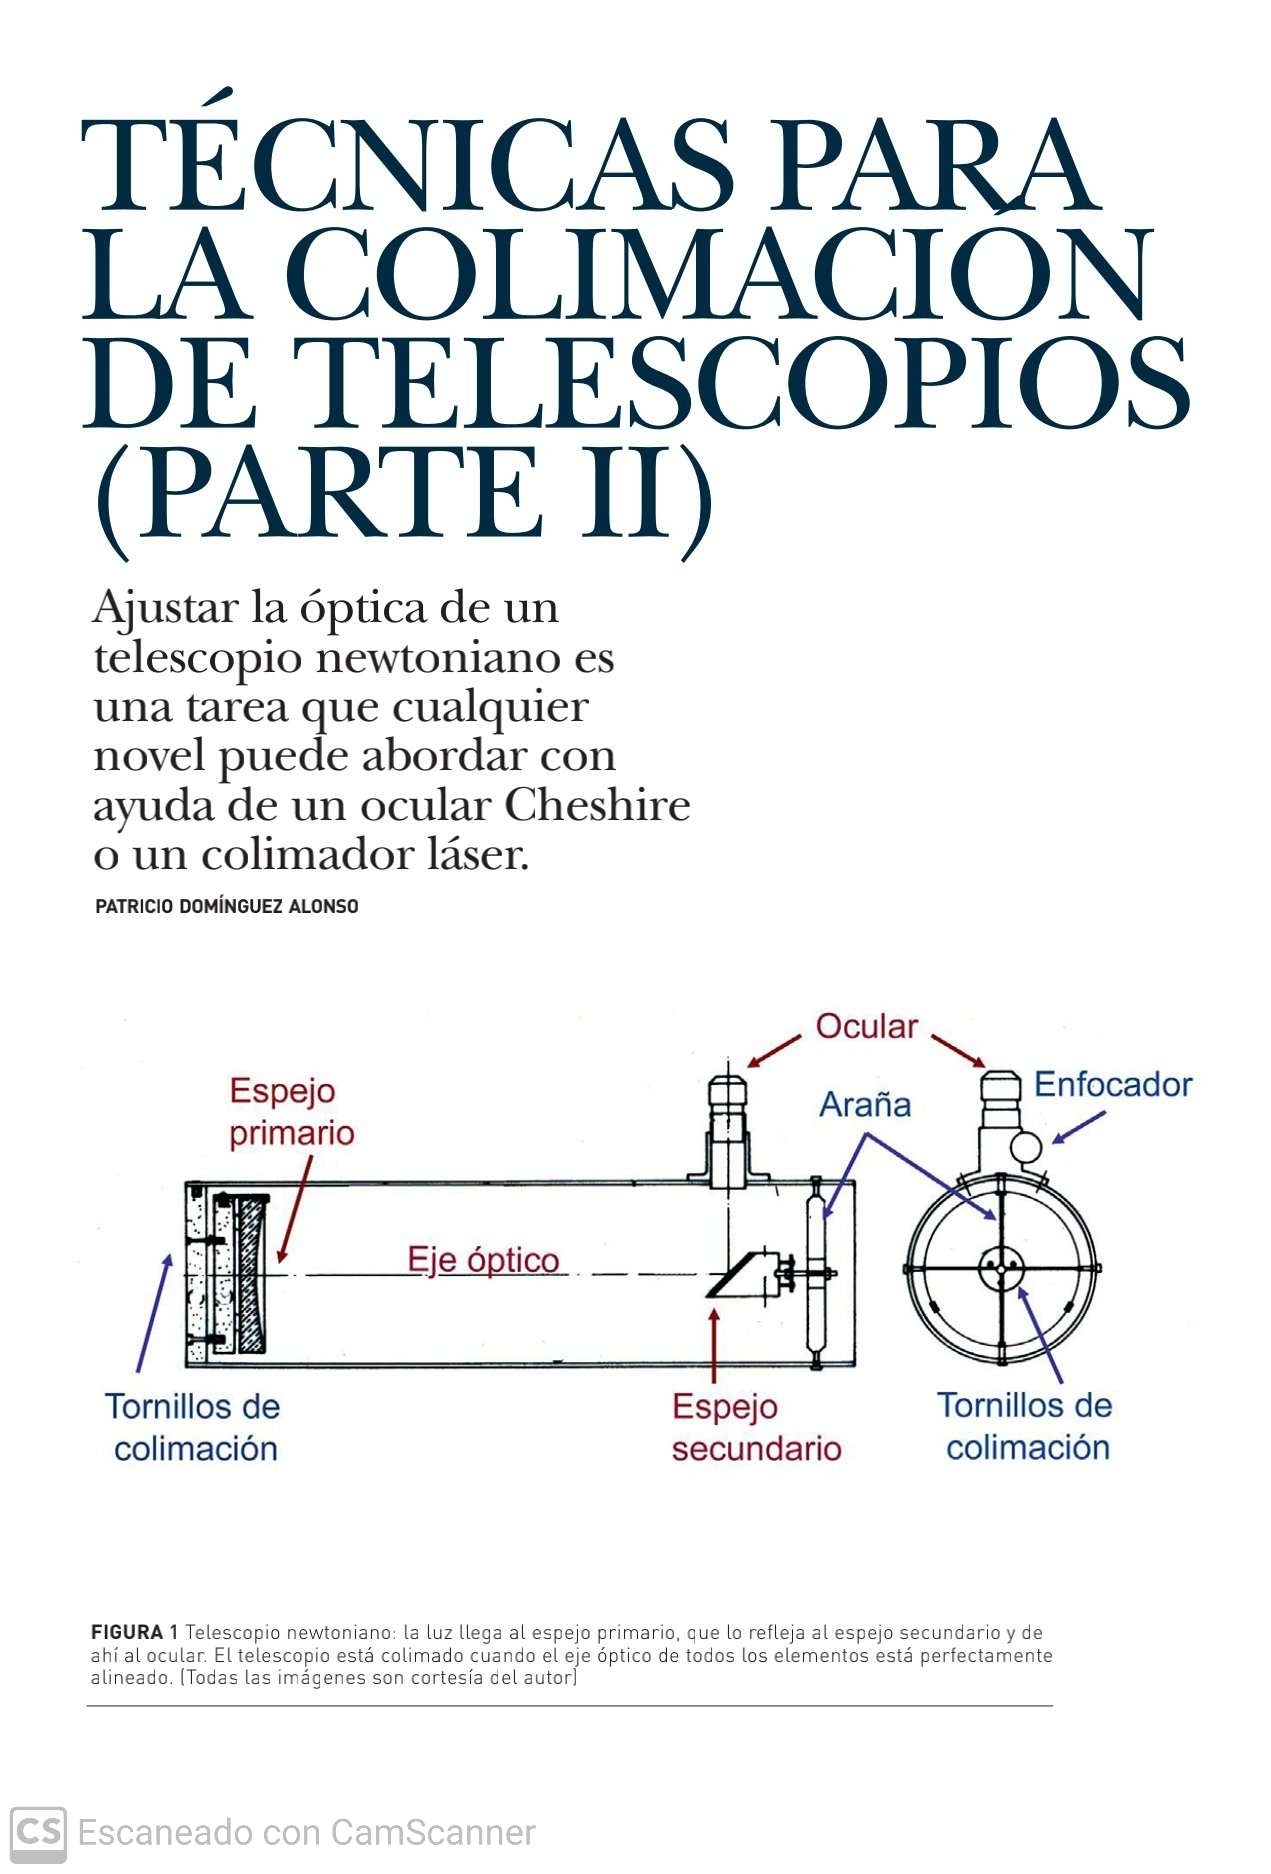 Colimacion-telescopios_7.jpg.616ca40093b9dca55ab9ad6ed260ad01.jpg